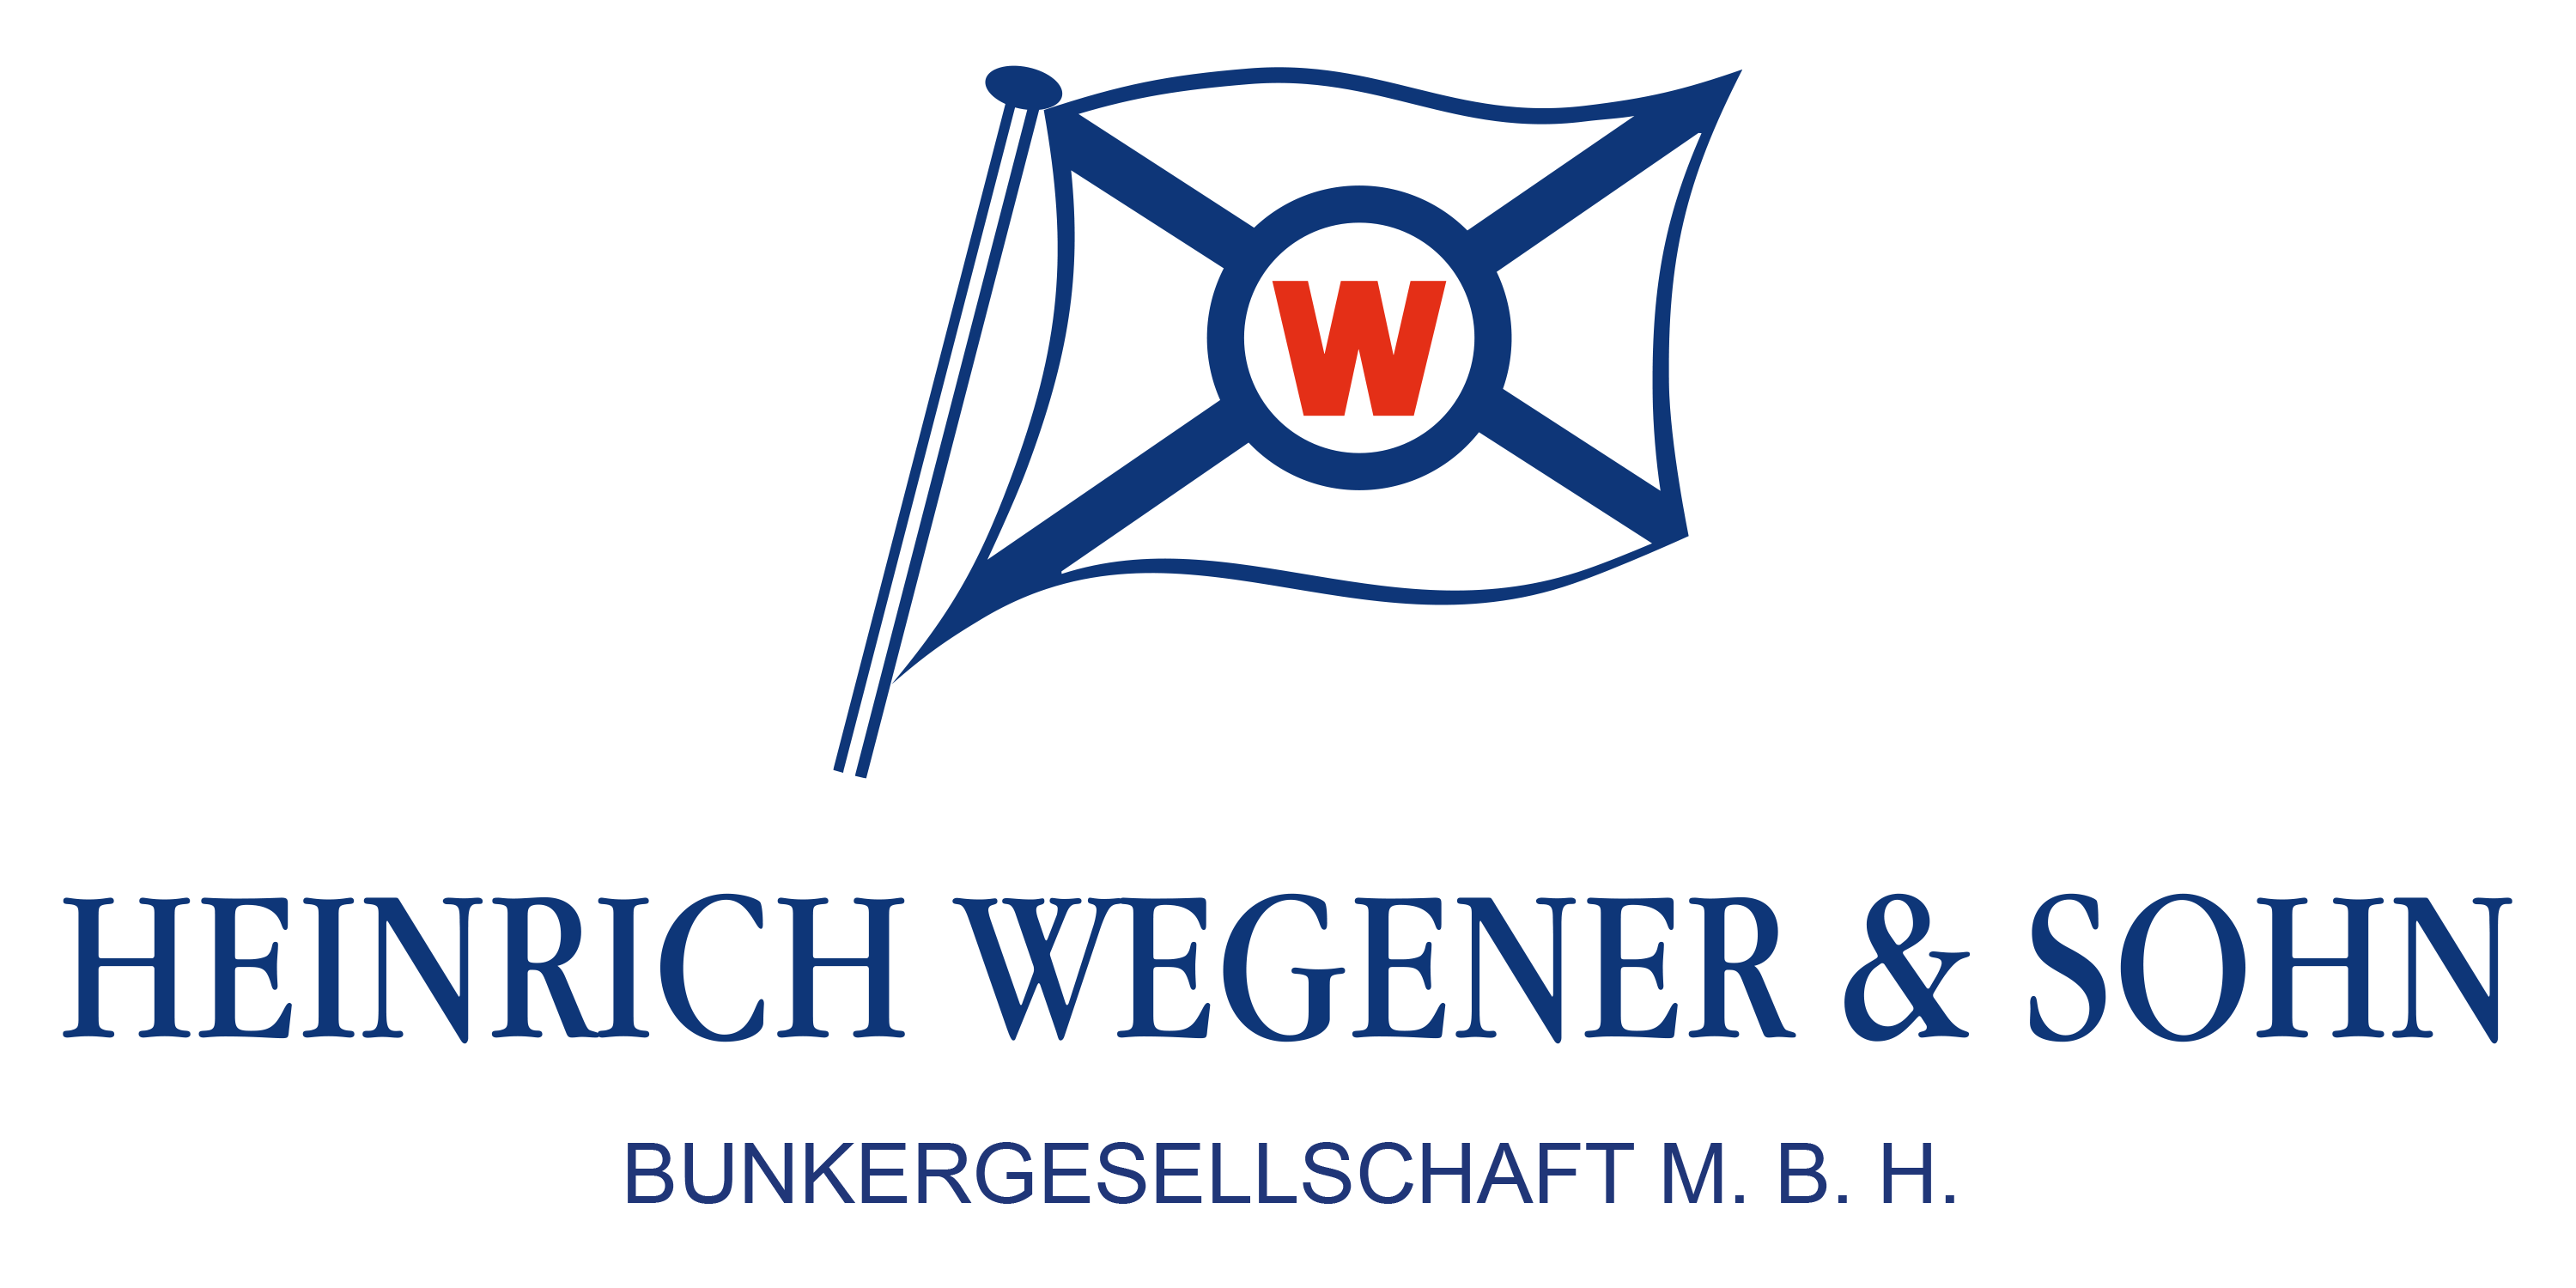 Heinrich Wegener & Sohn Bunkergesellschaft m.b.H.